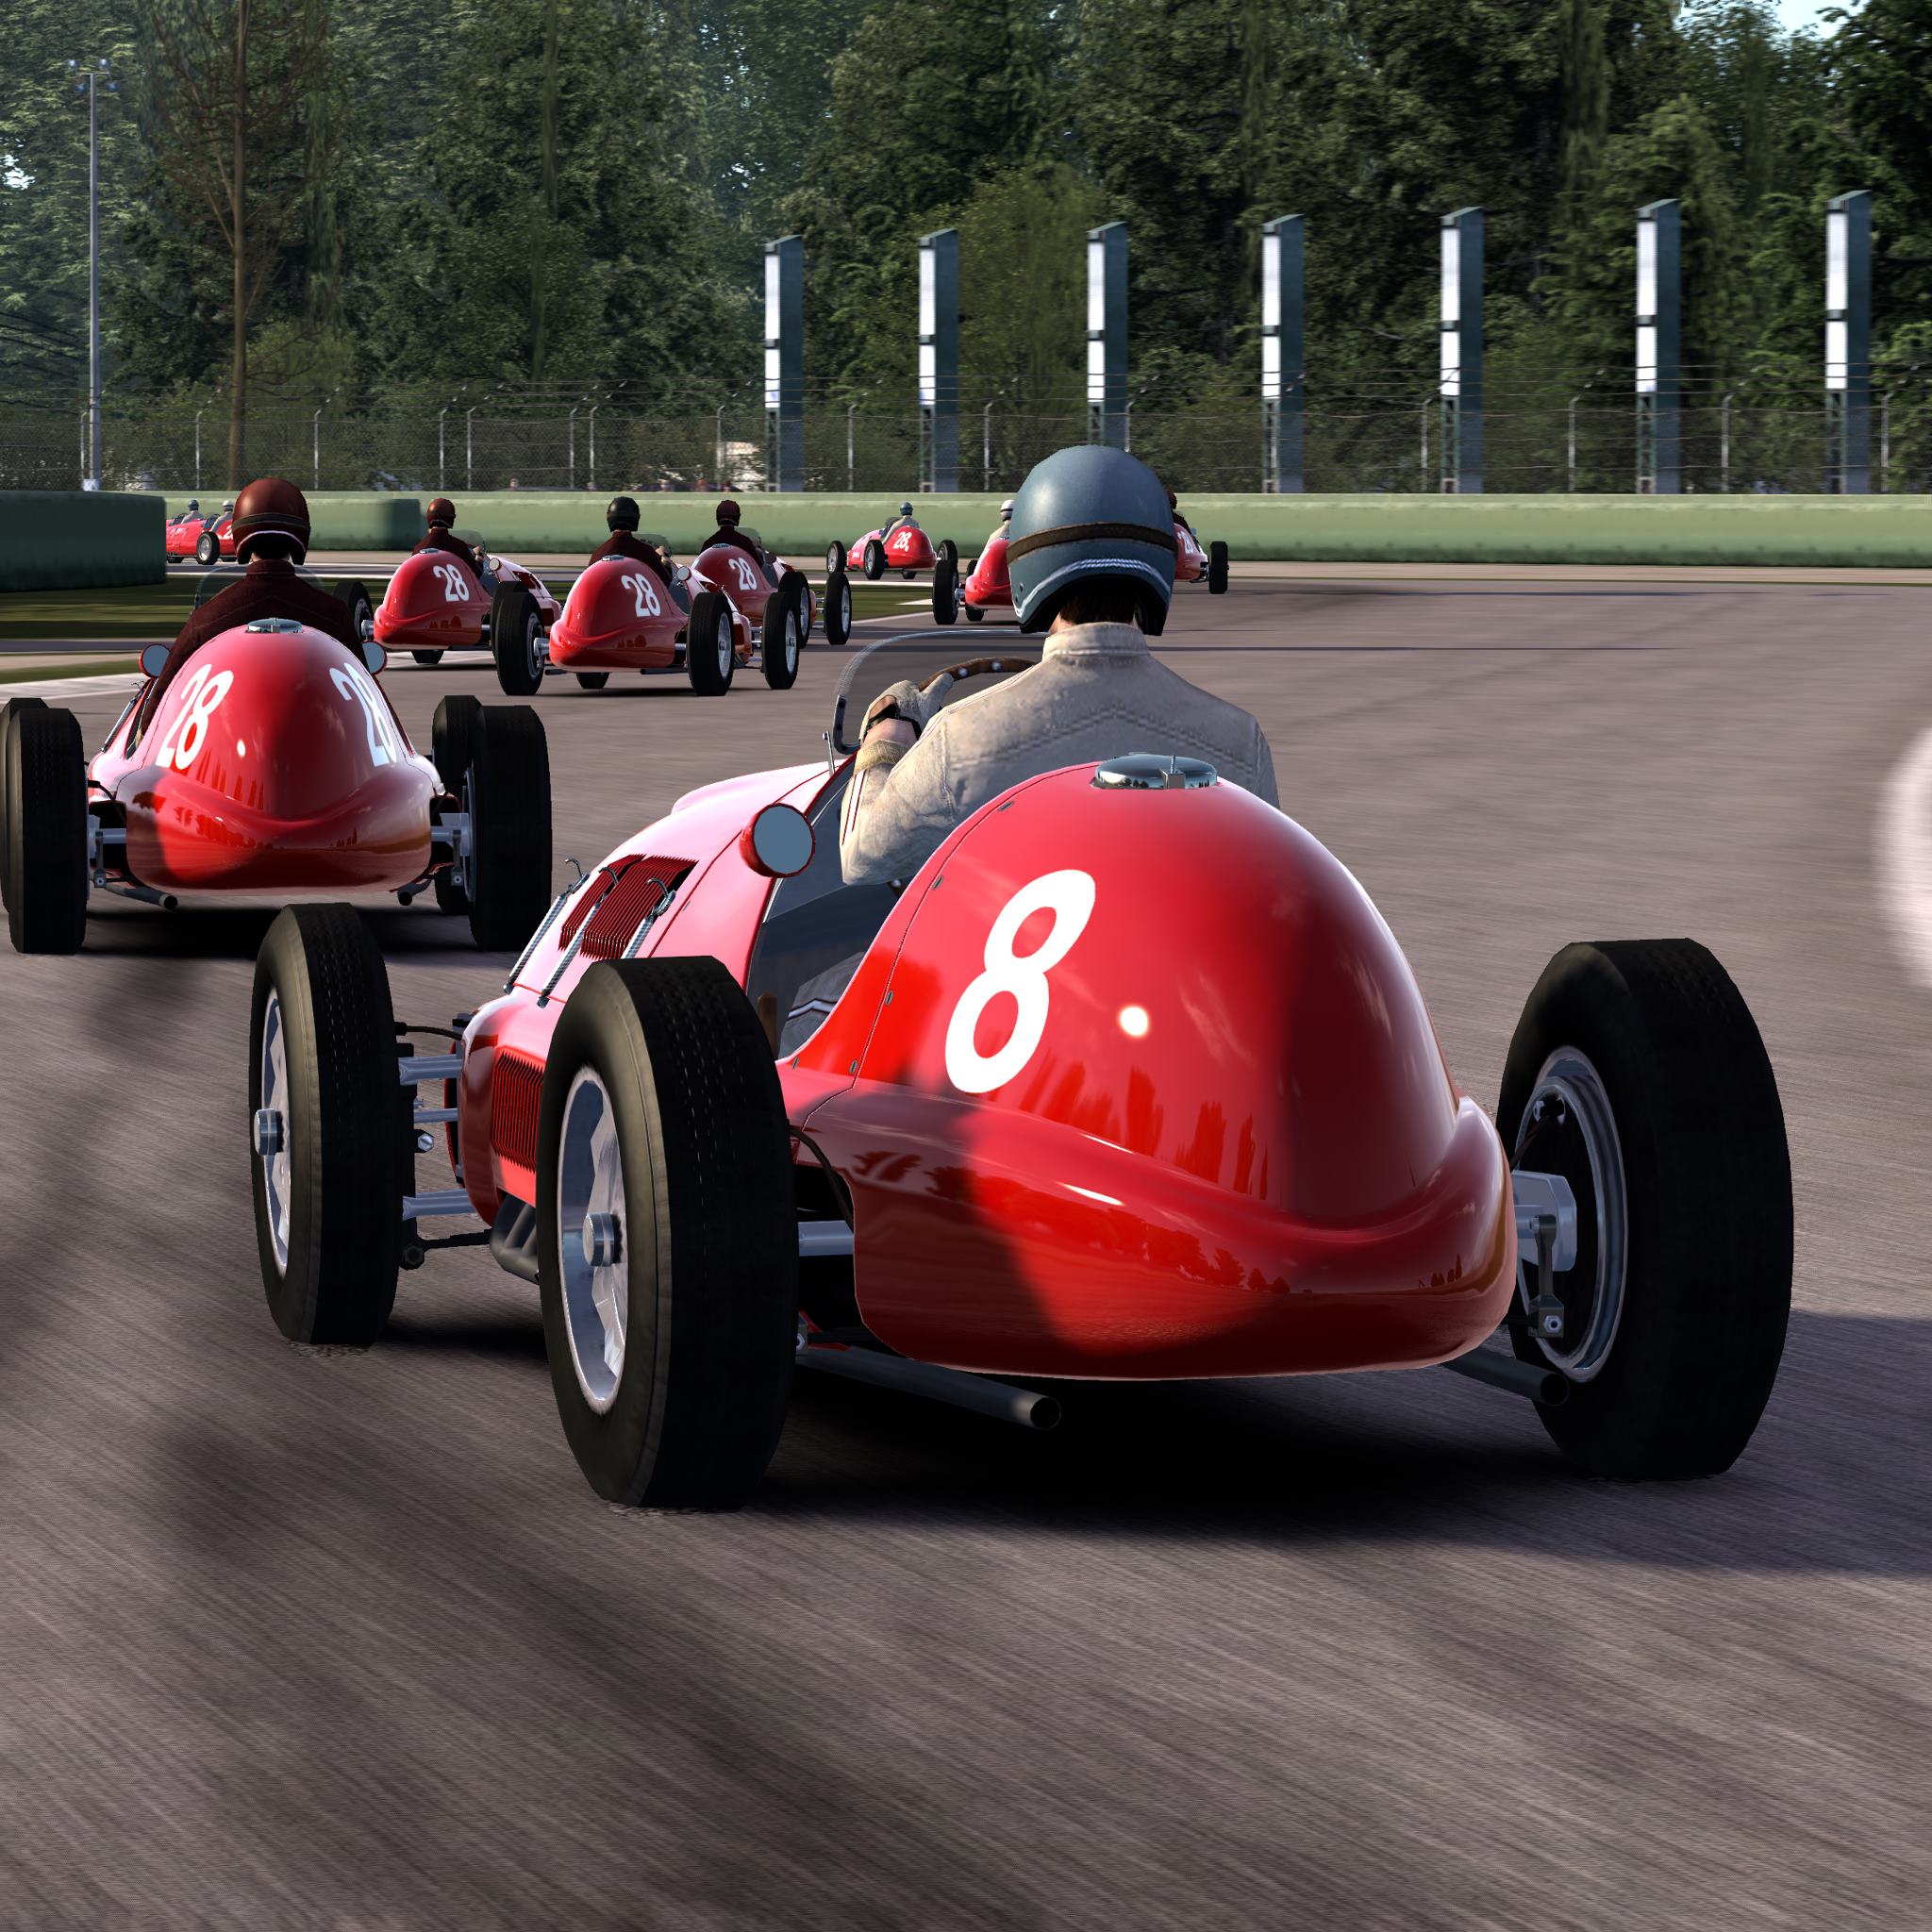 download test drive ferrari racing legends steam for free